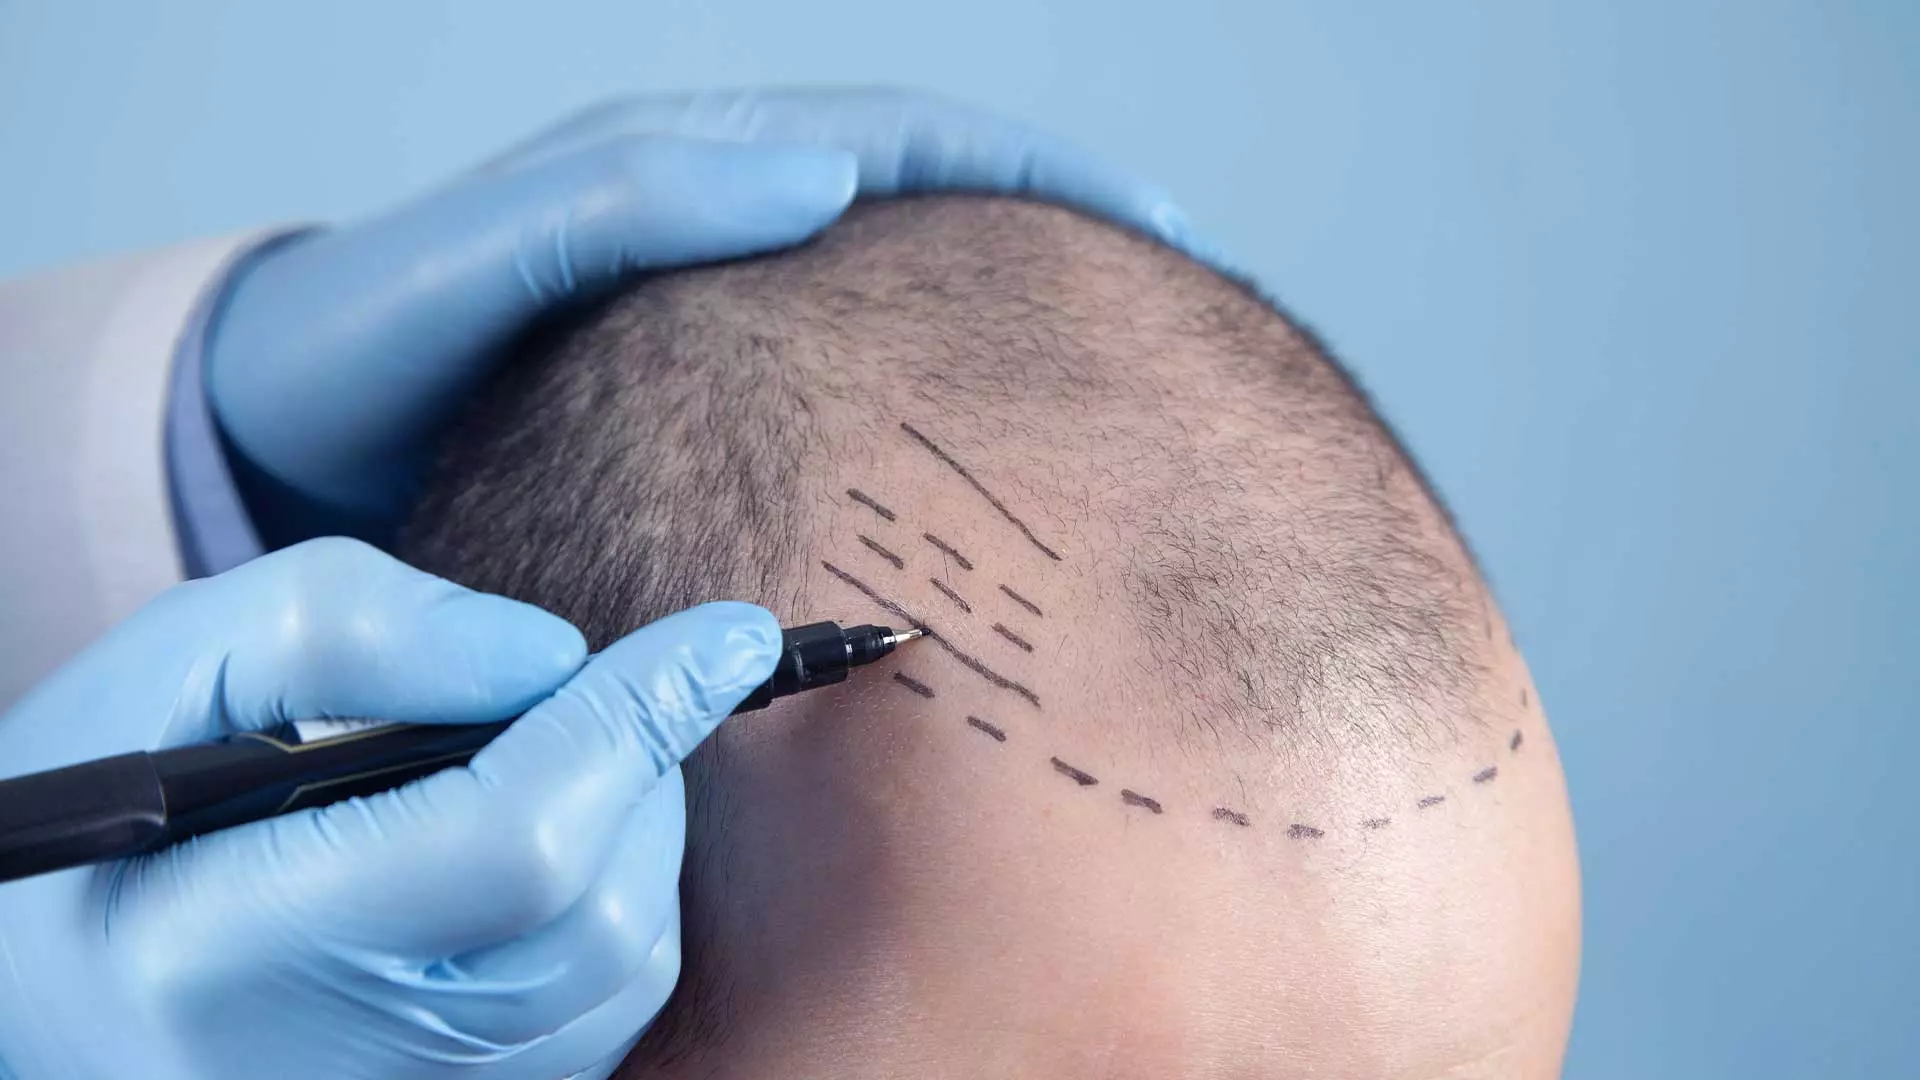 How long do hair transplant lasts?